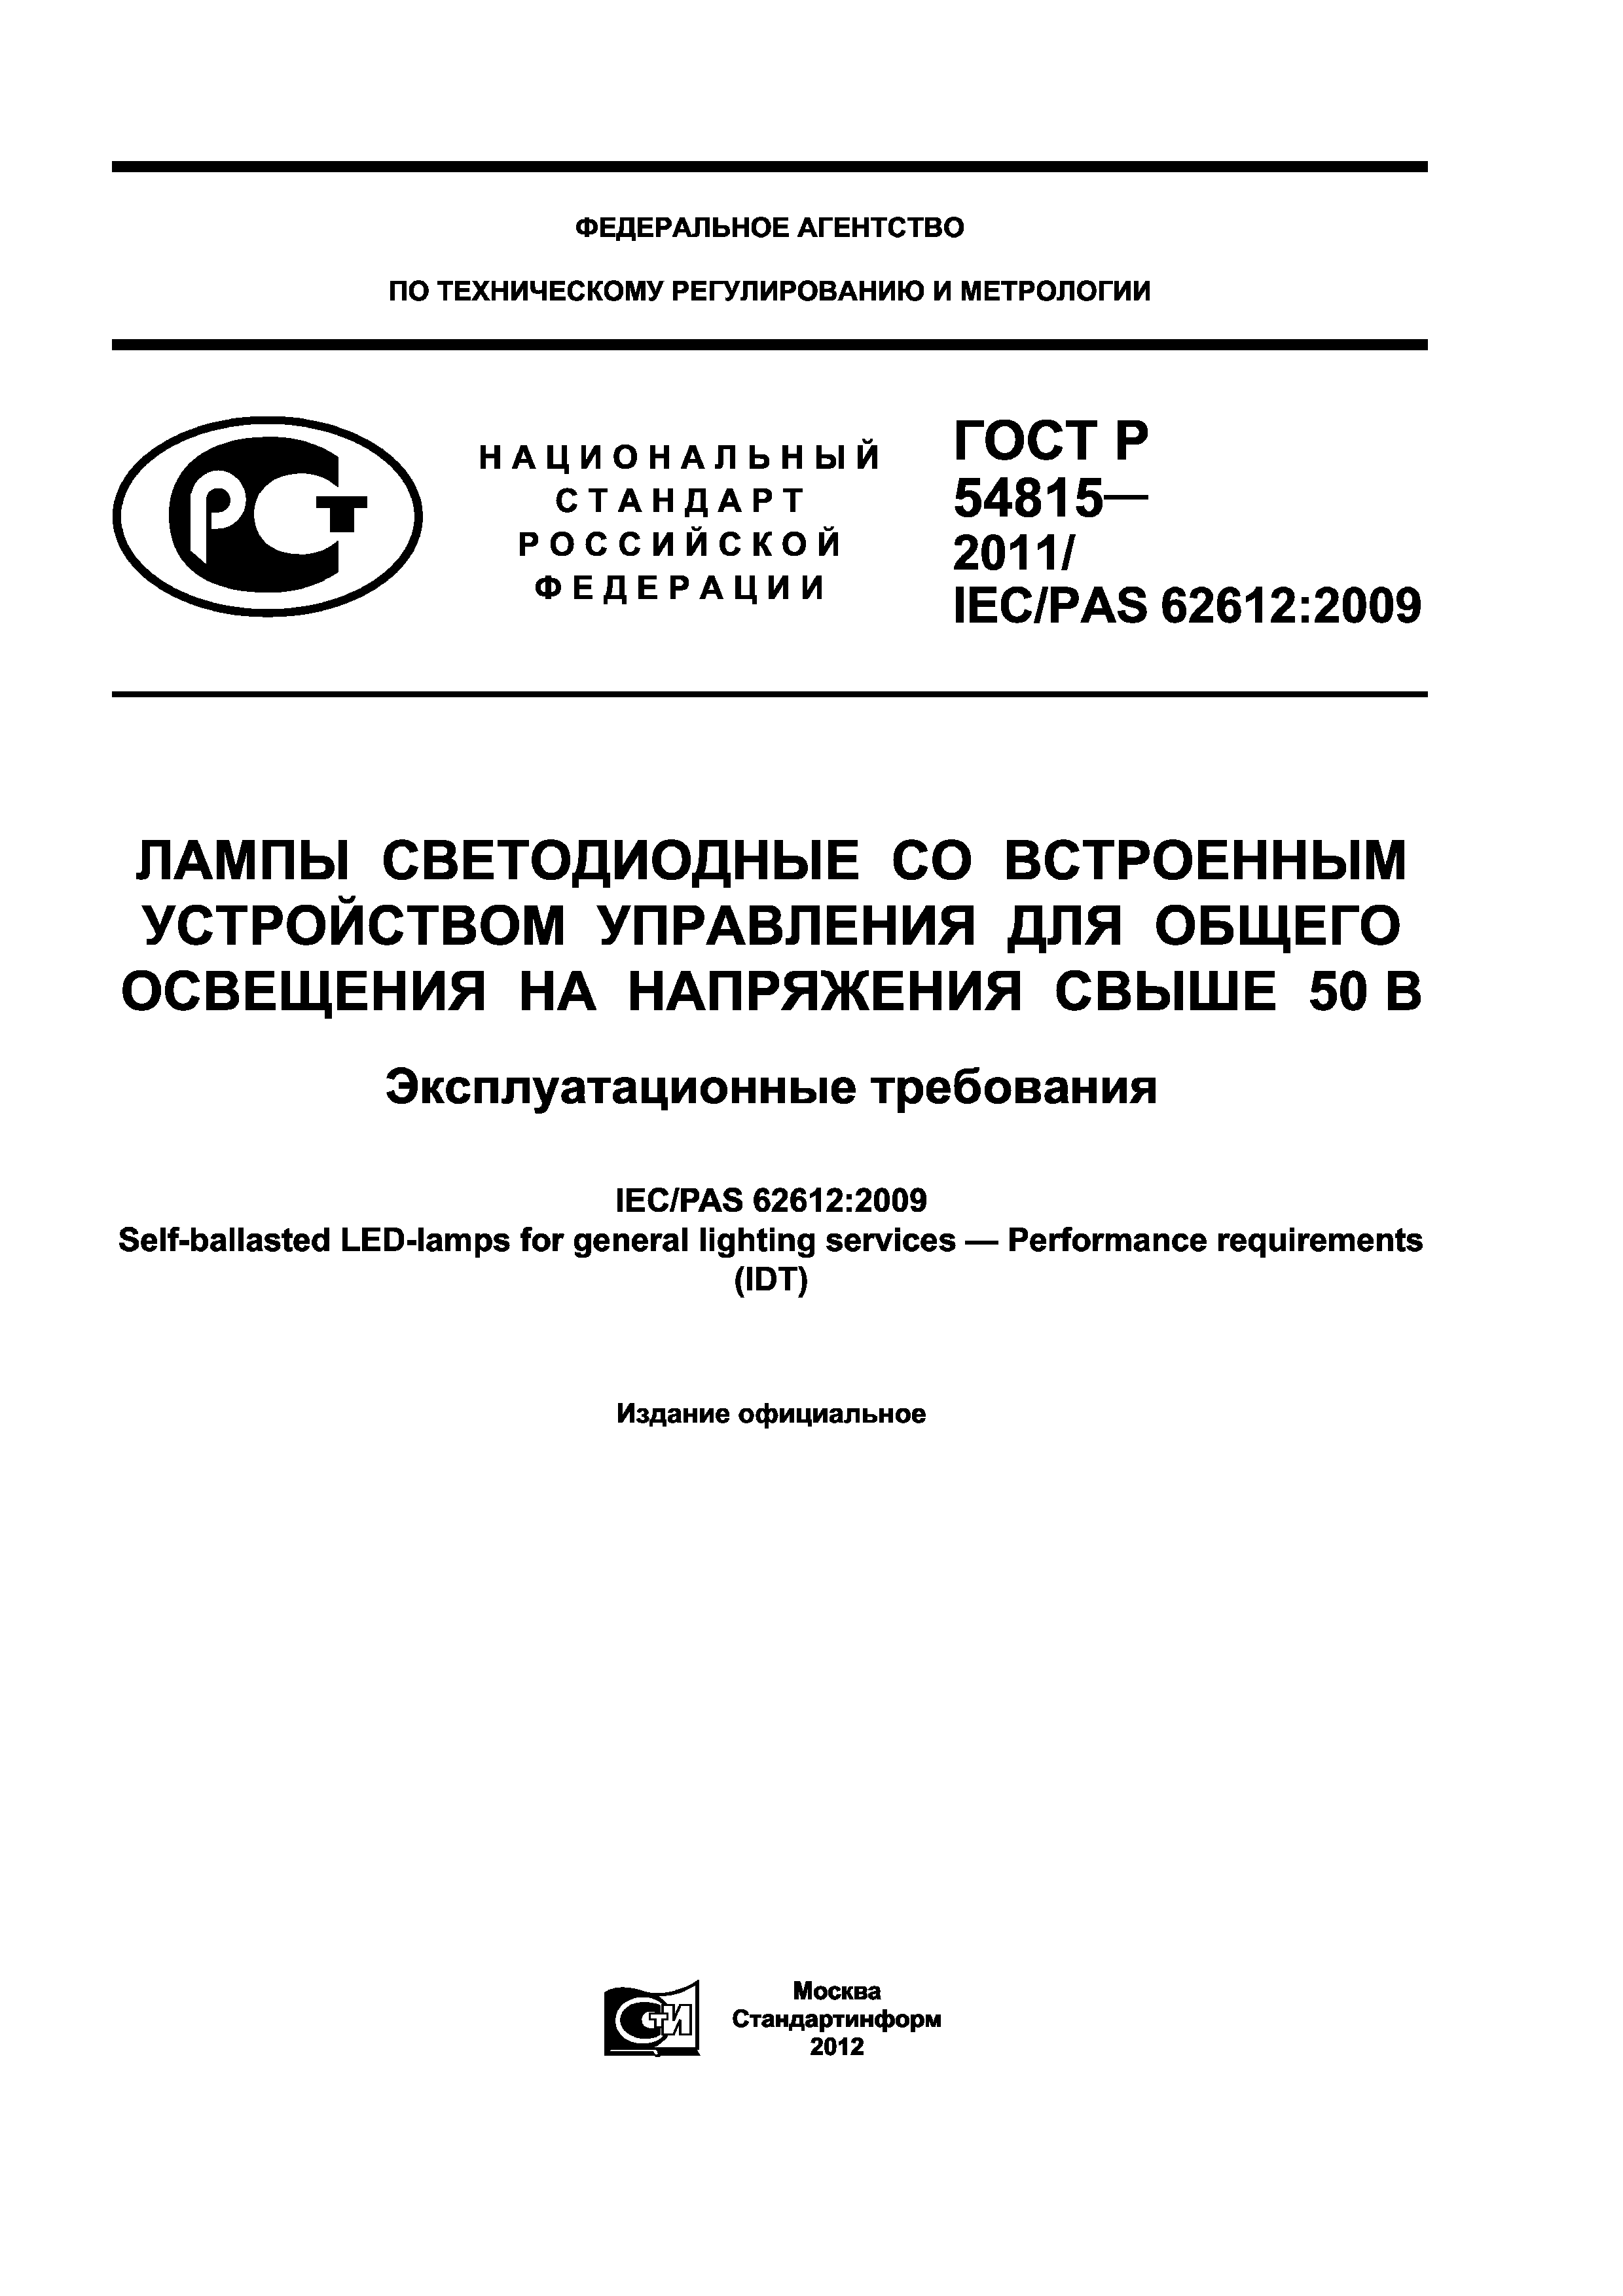 ГОСТ Р 54815-2011